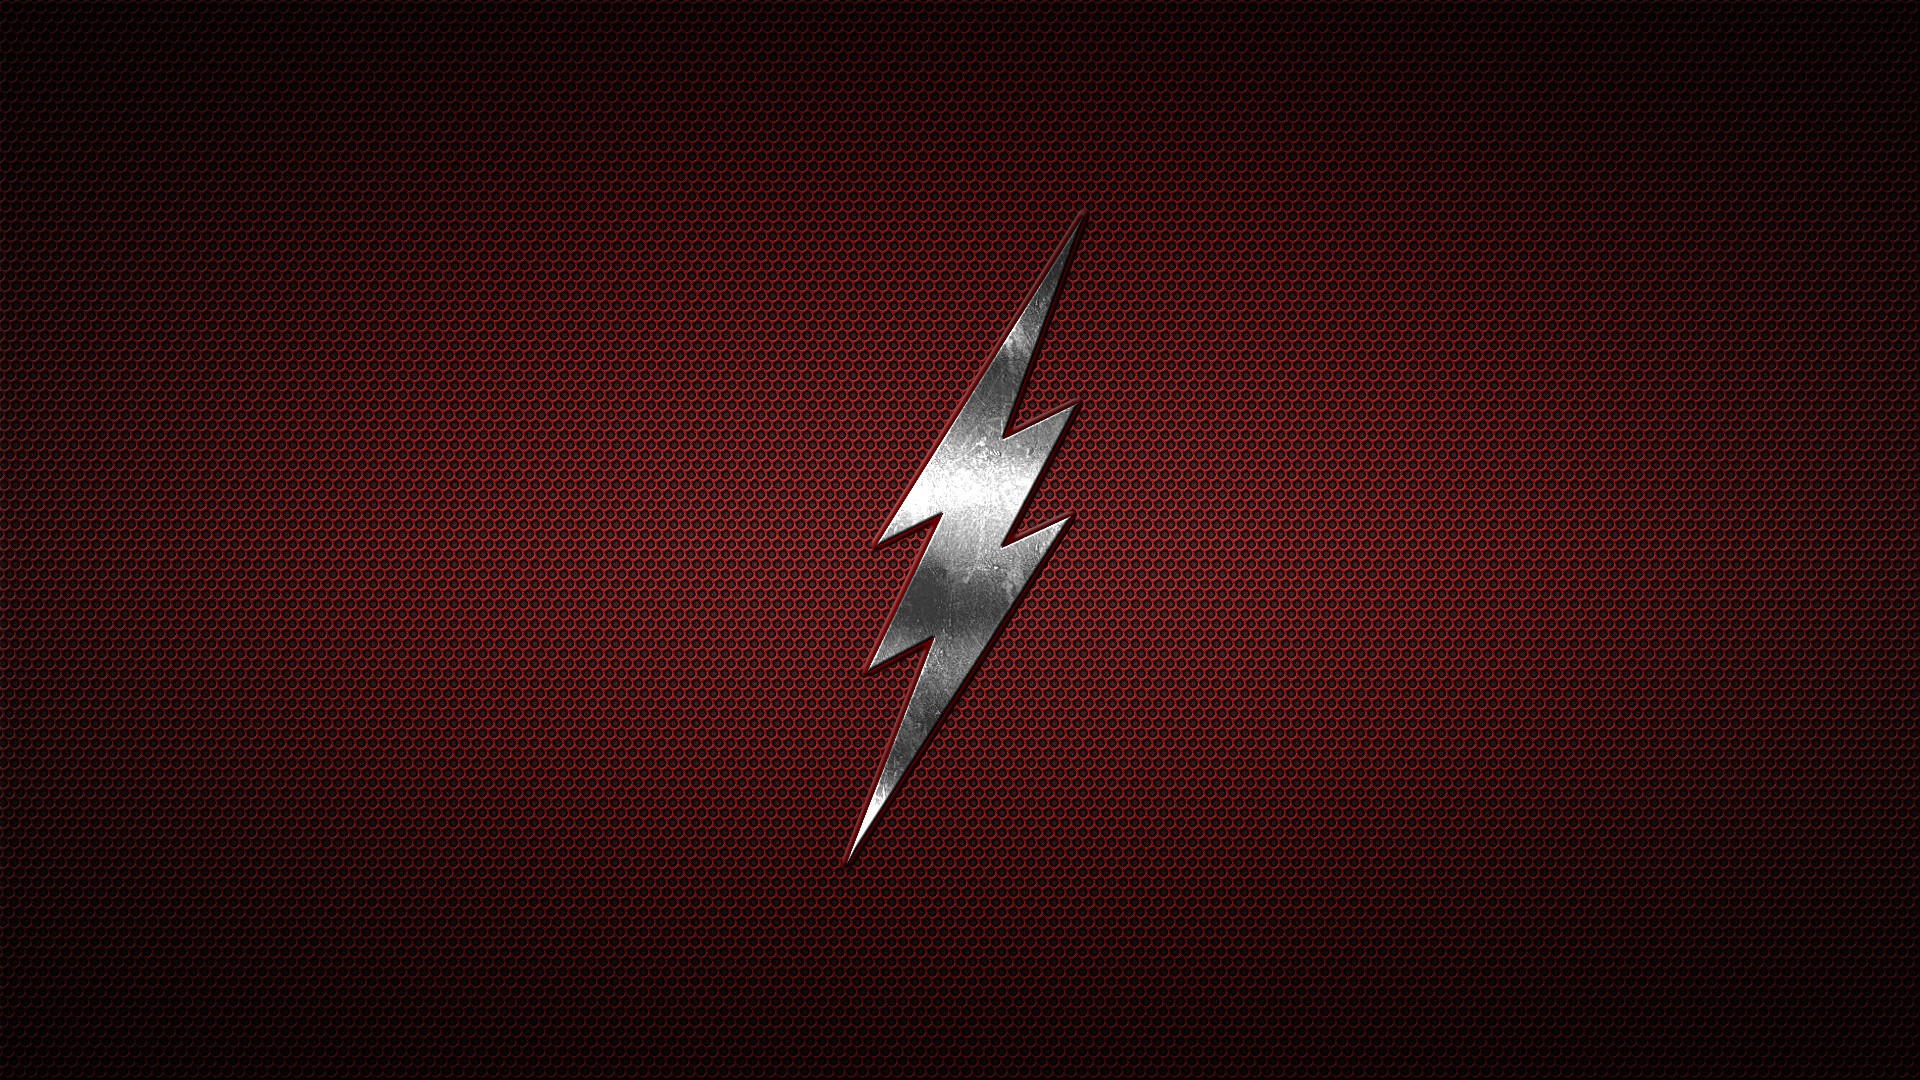 General 1920x1080 The Flash logo minimalism simple background superhero